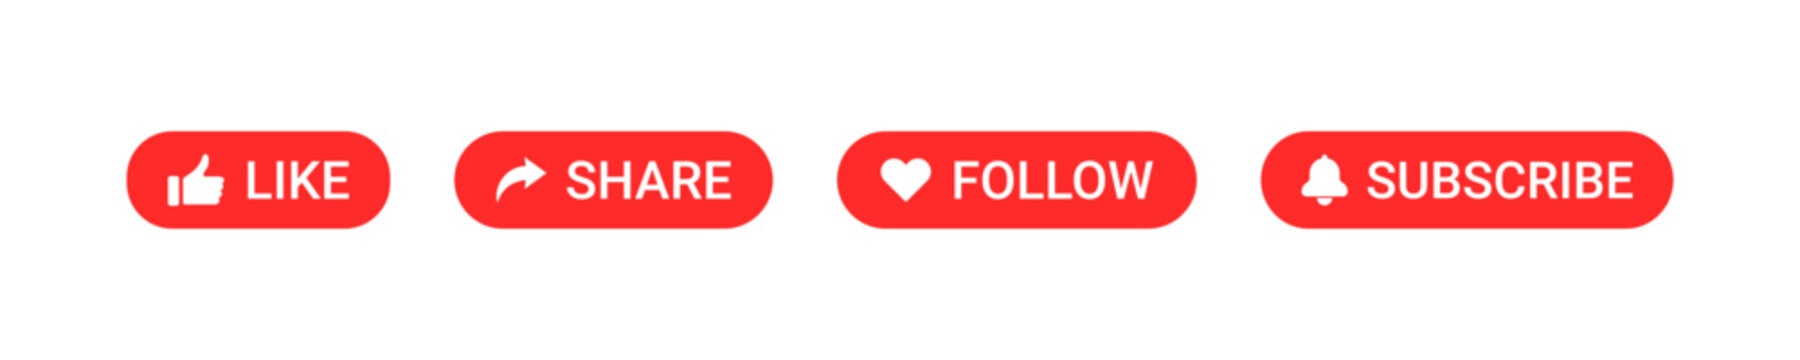 Like, share, follow, subscribe button icon. Video symbol. Social media app. Online bar click. Application interface. Vector illustration.